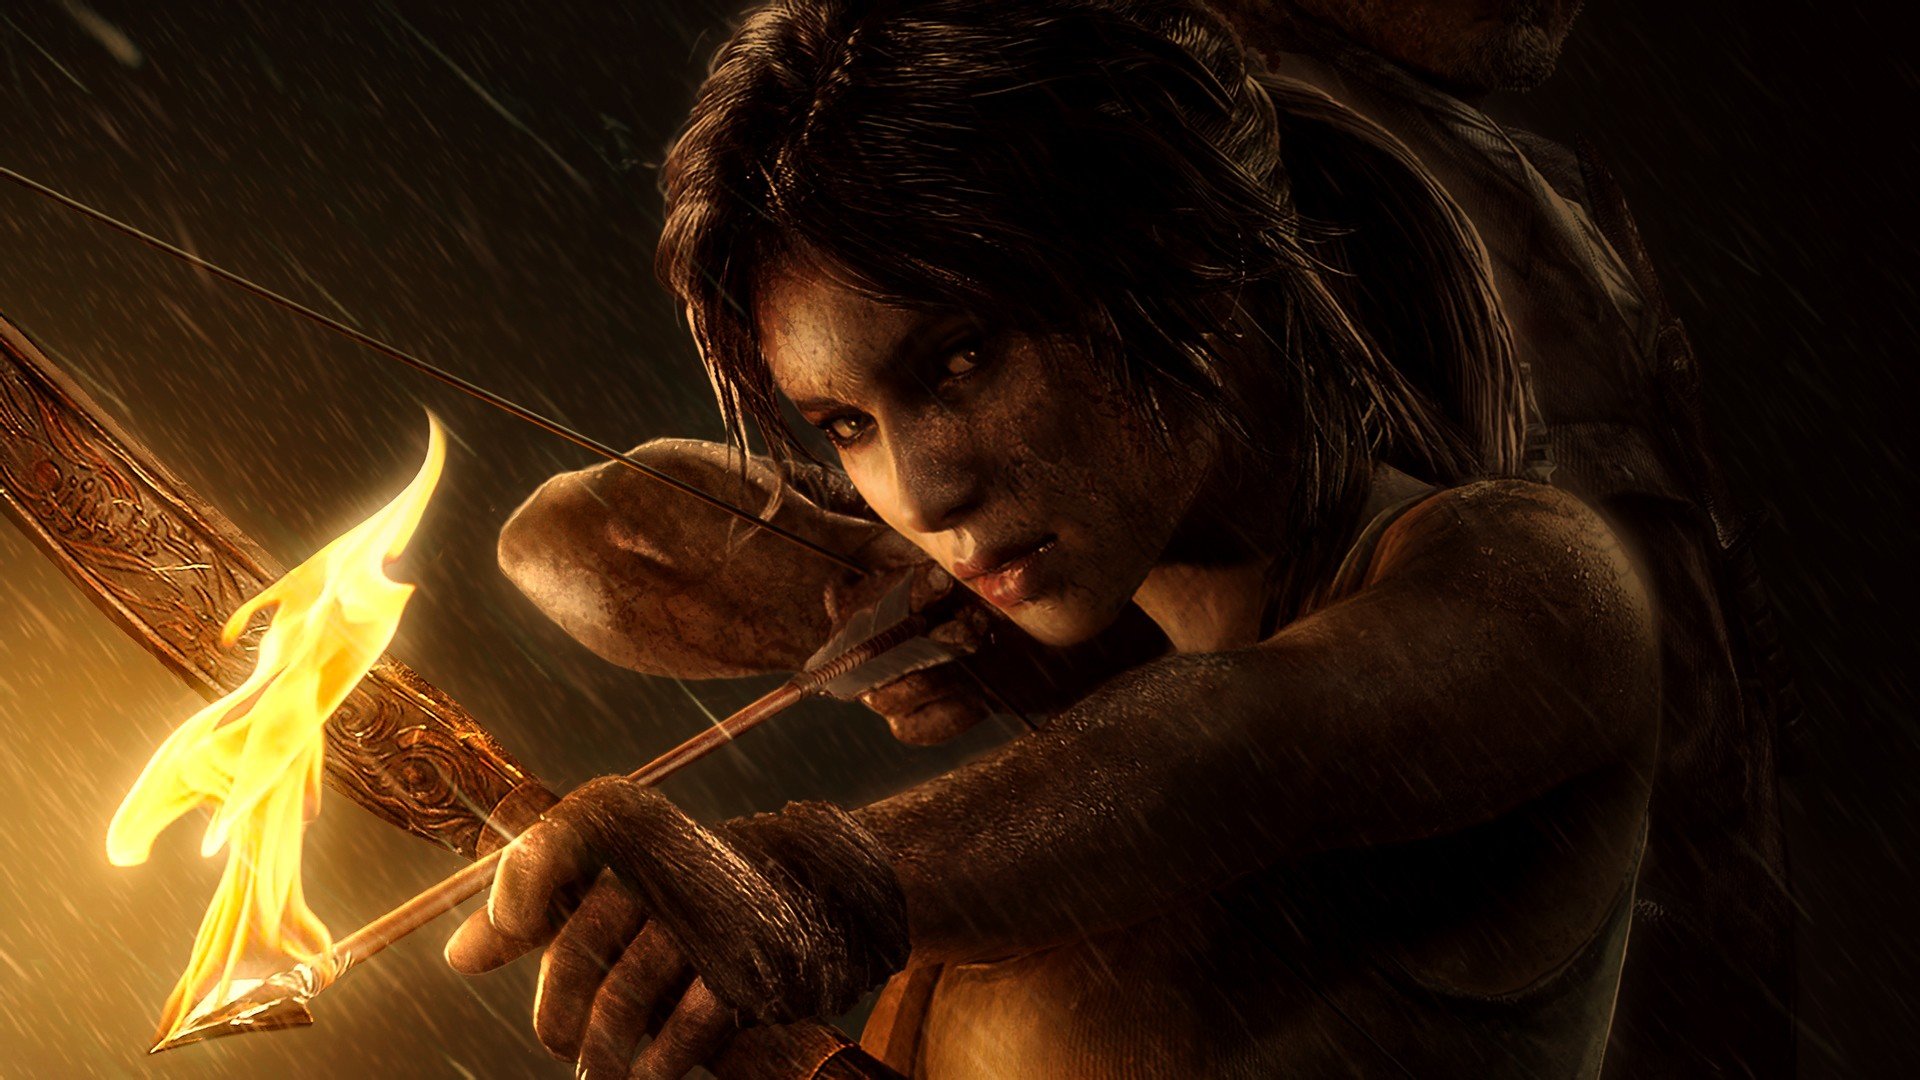 Awesome Tomb Raider (Lara Croft) free wallpaper ID:437288 for full hd 1080p computer